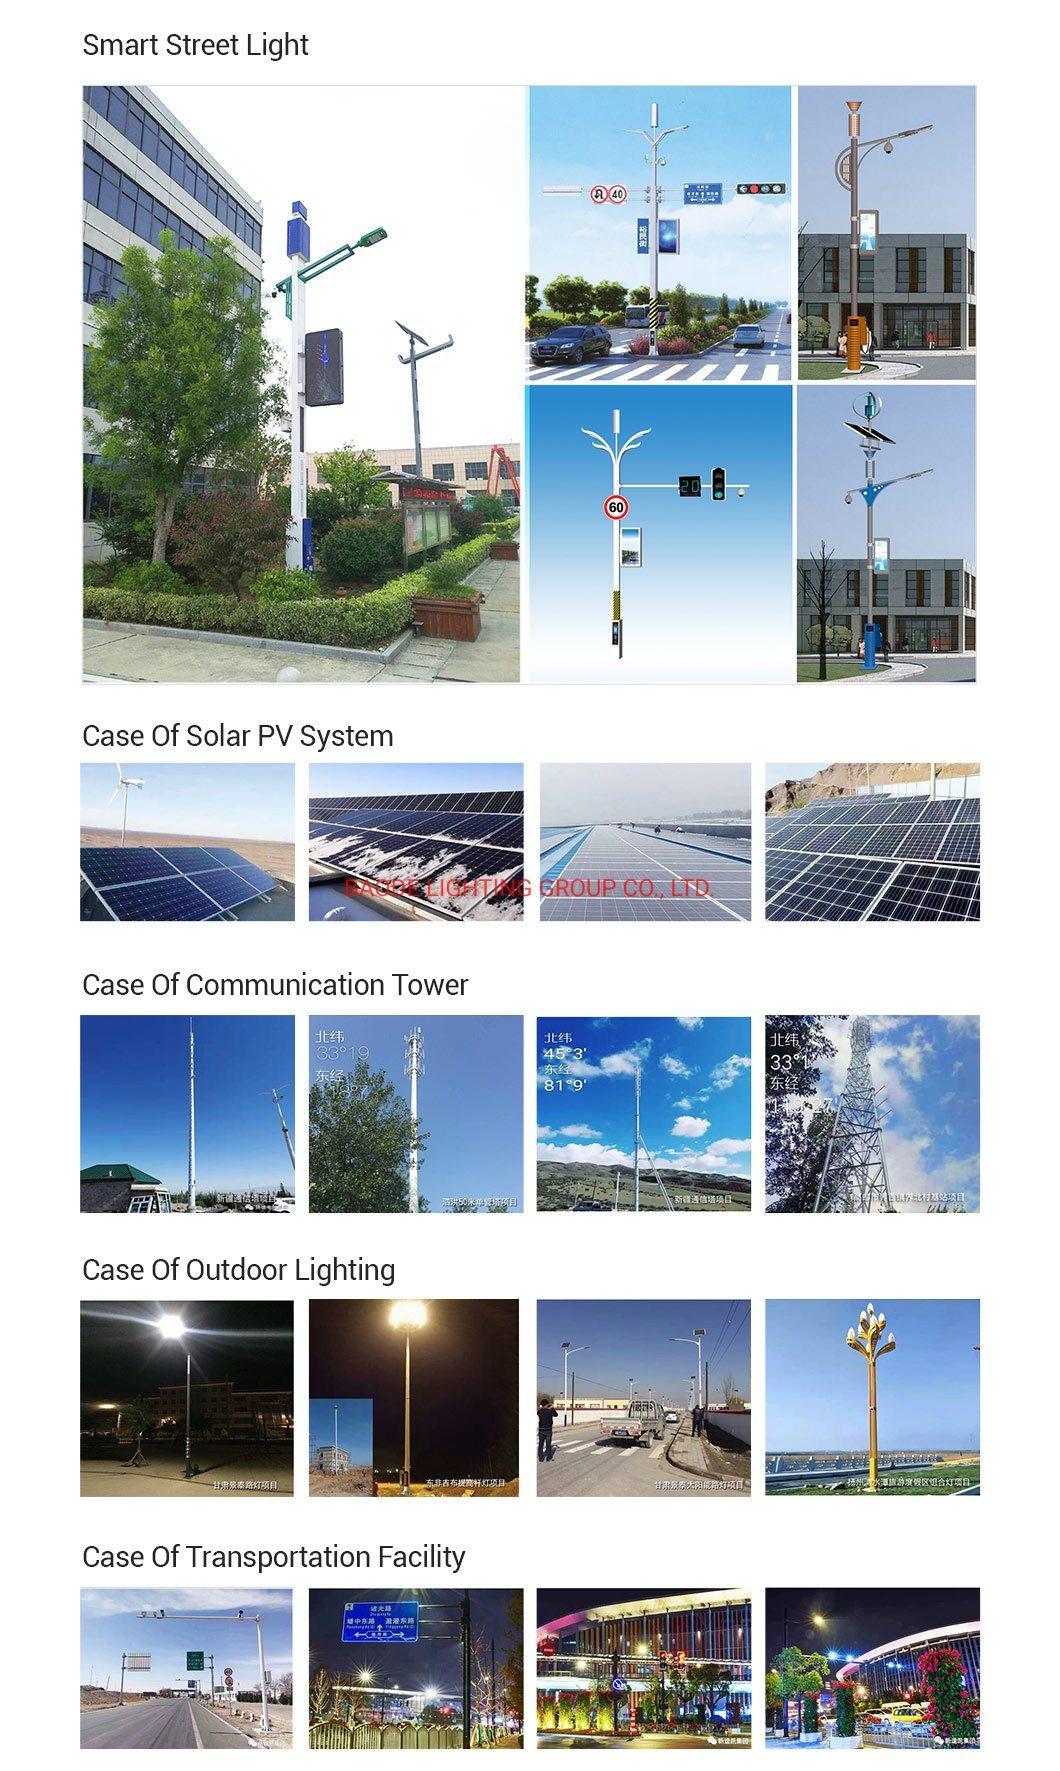 Outdoor Lights 6m 40W Solar Street Light Factory Price Supplier